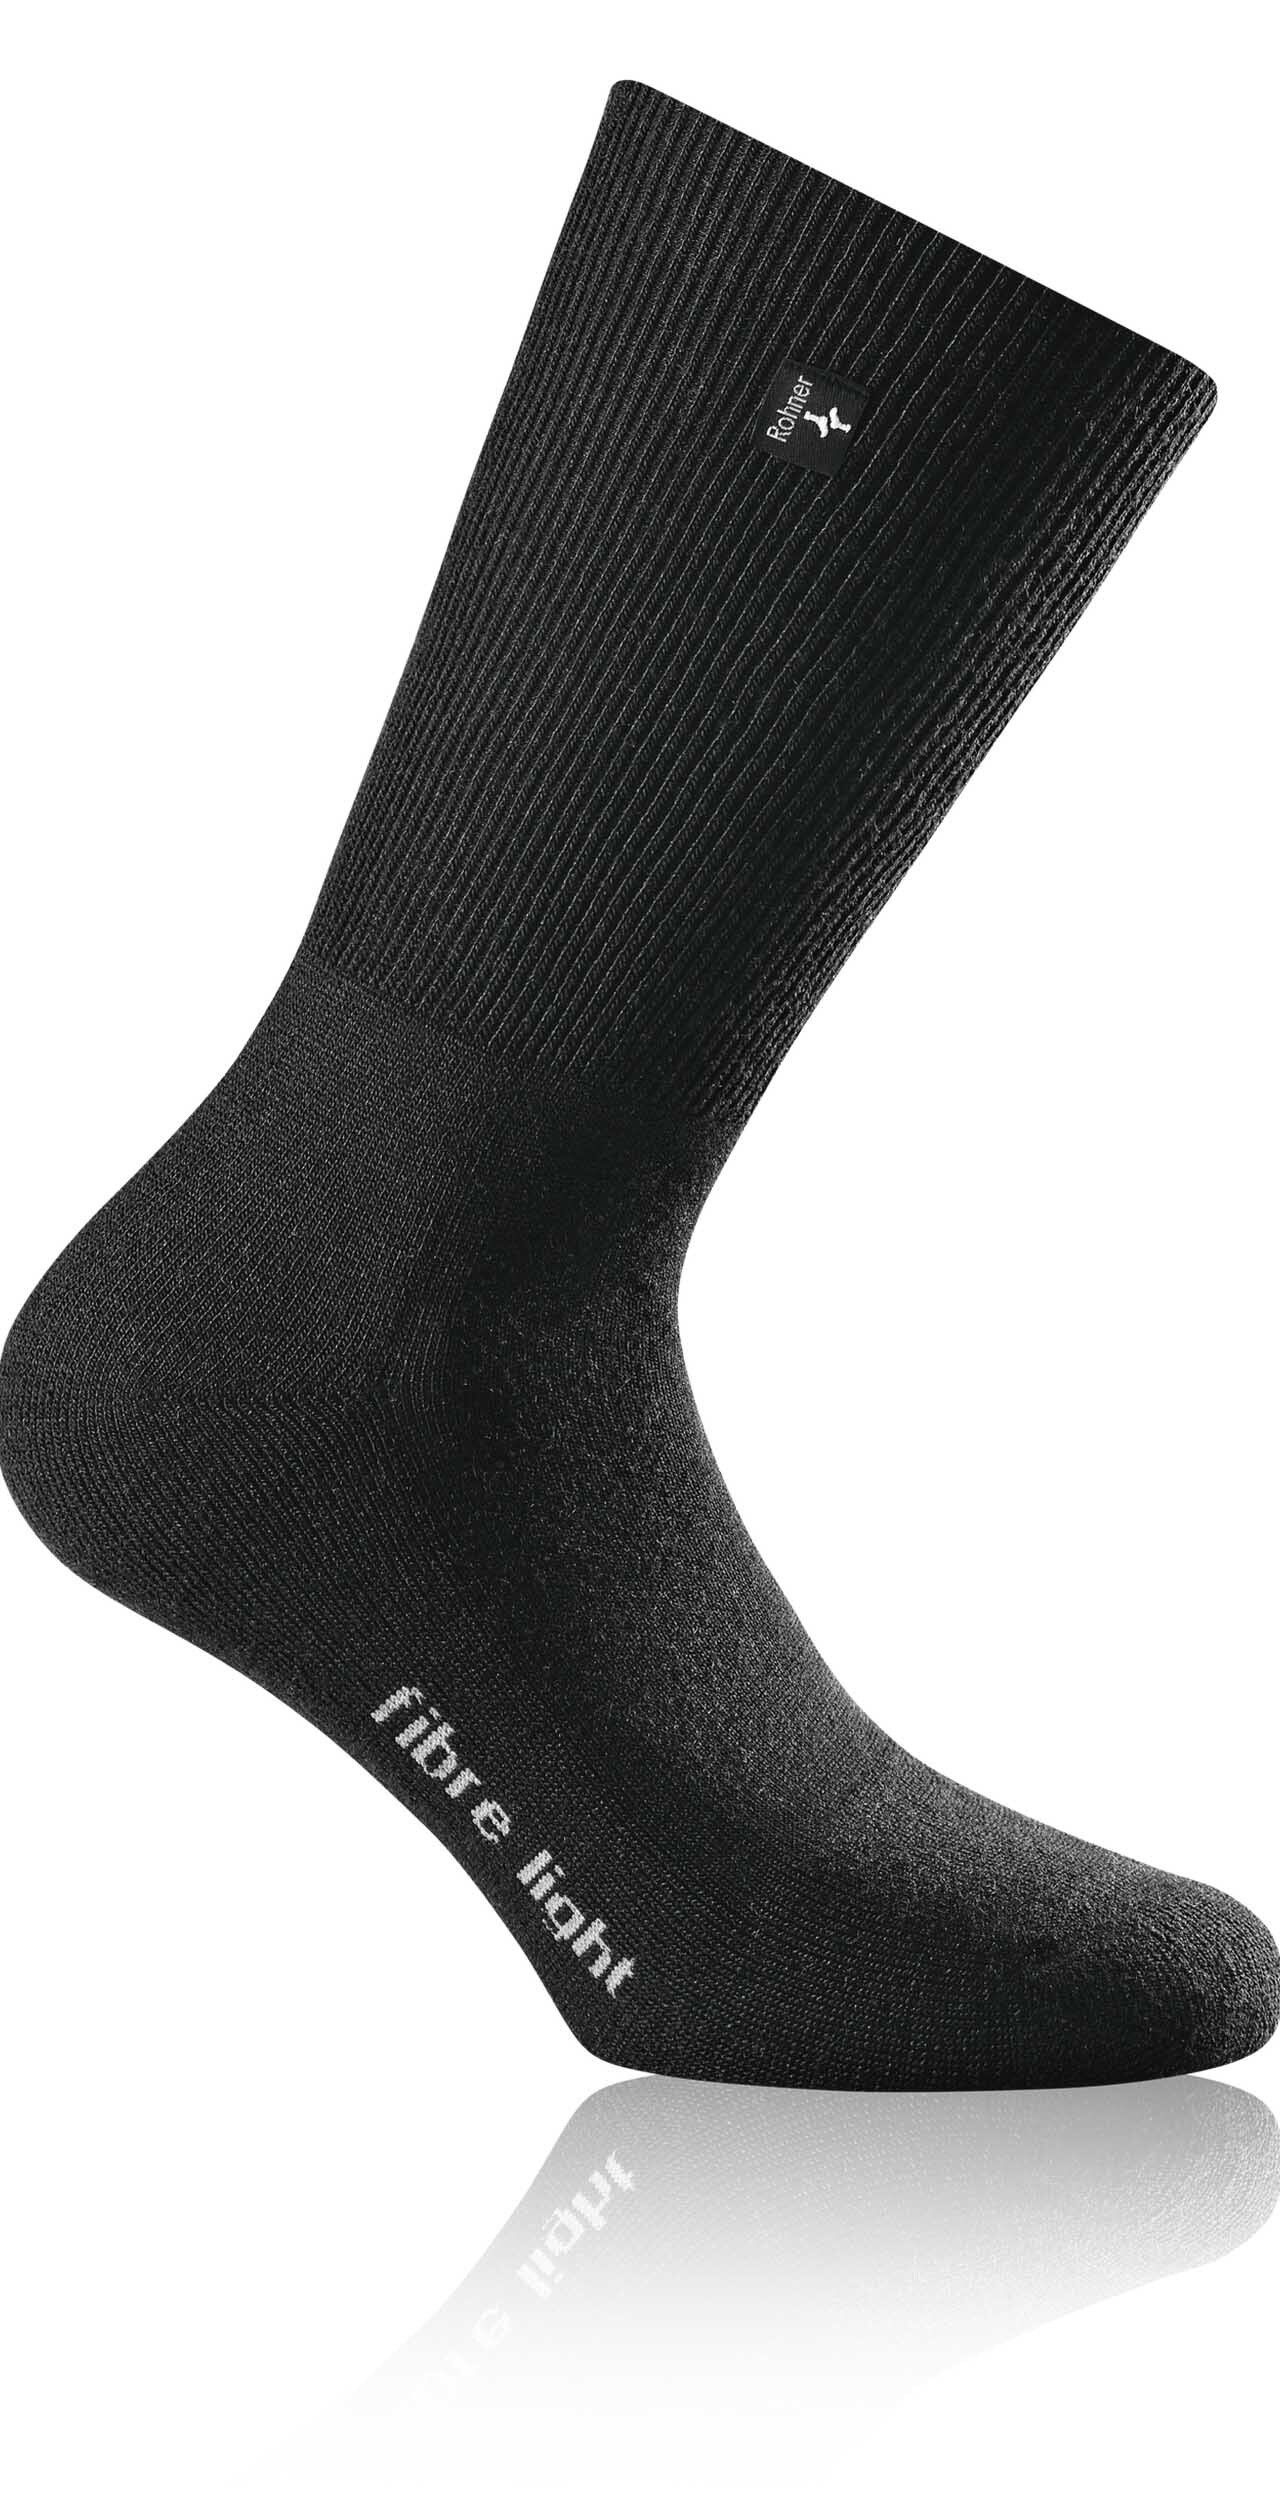 Rohner Socks Sportsocken Unisex - supeR light Socken fibre Trekking Schwarz